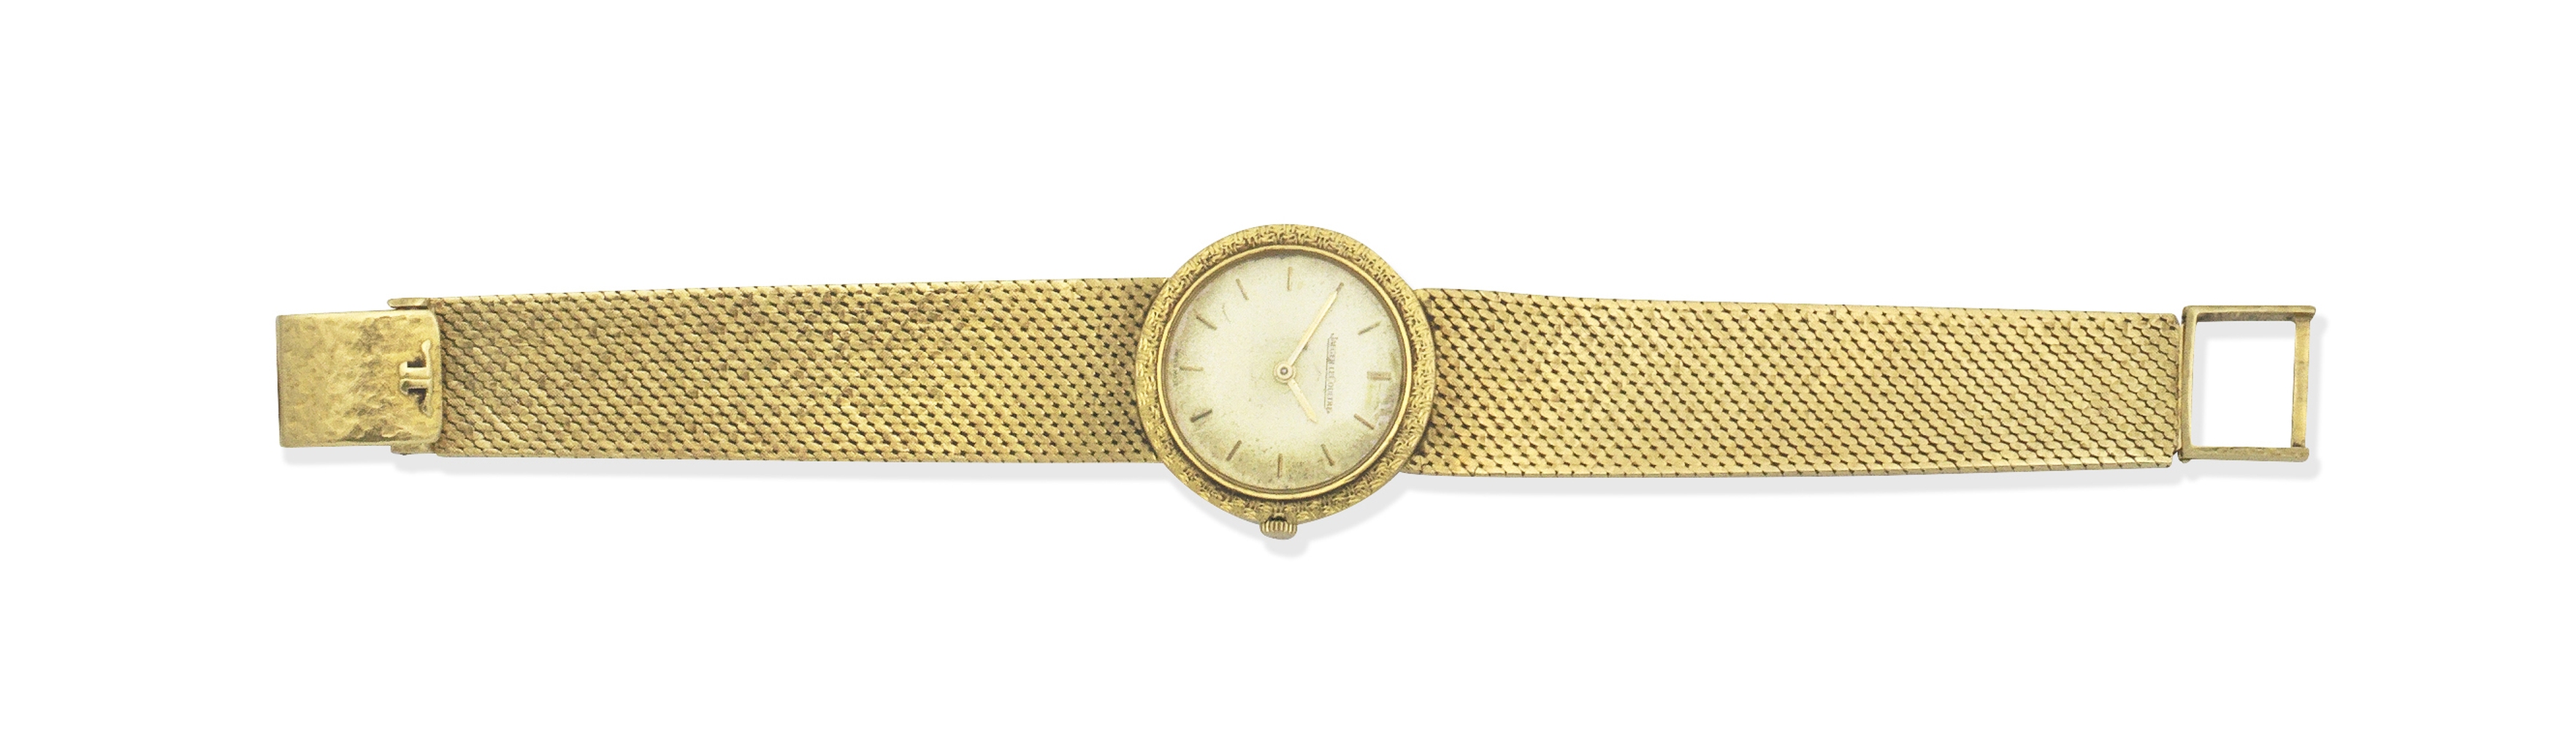 Jaeger-LeCoultre: Gold Wristwatch